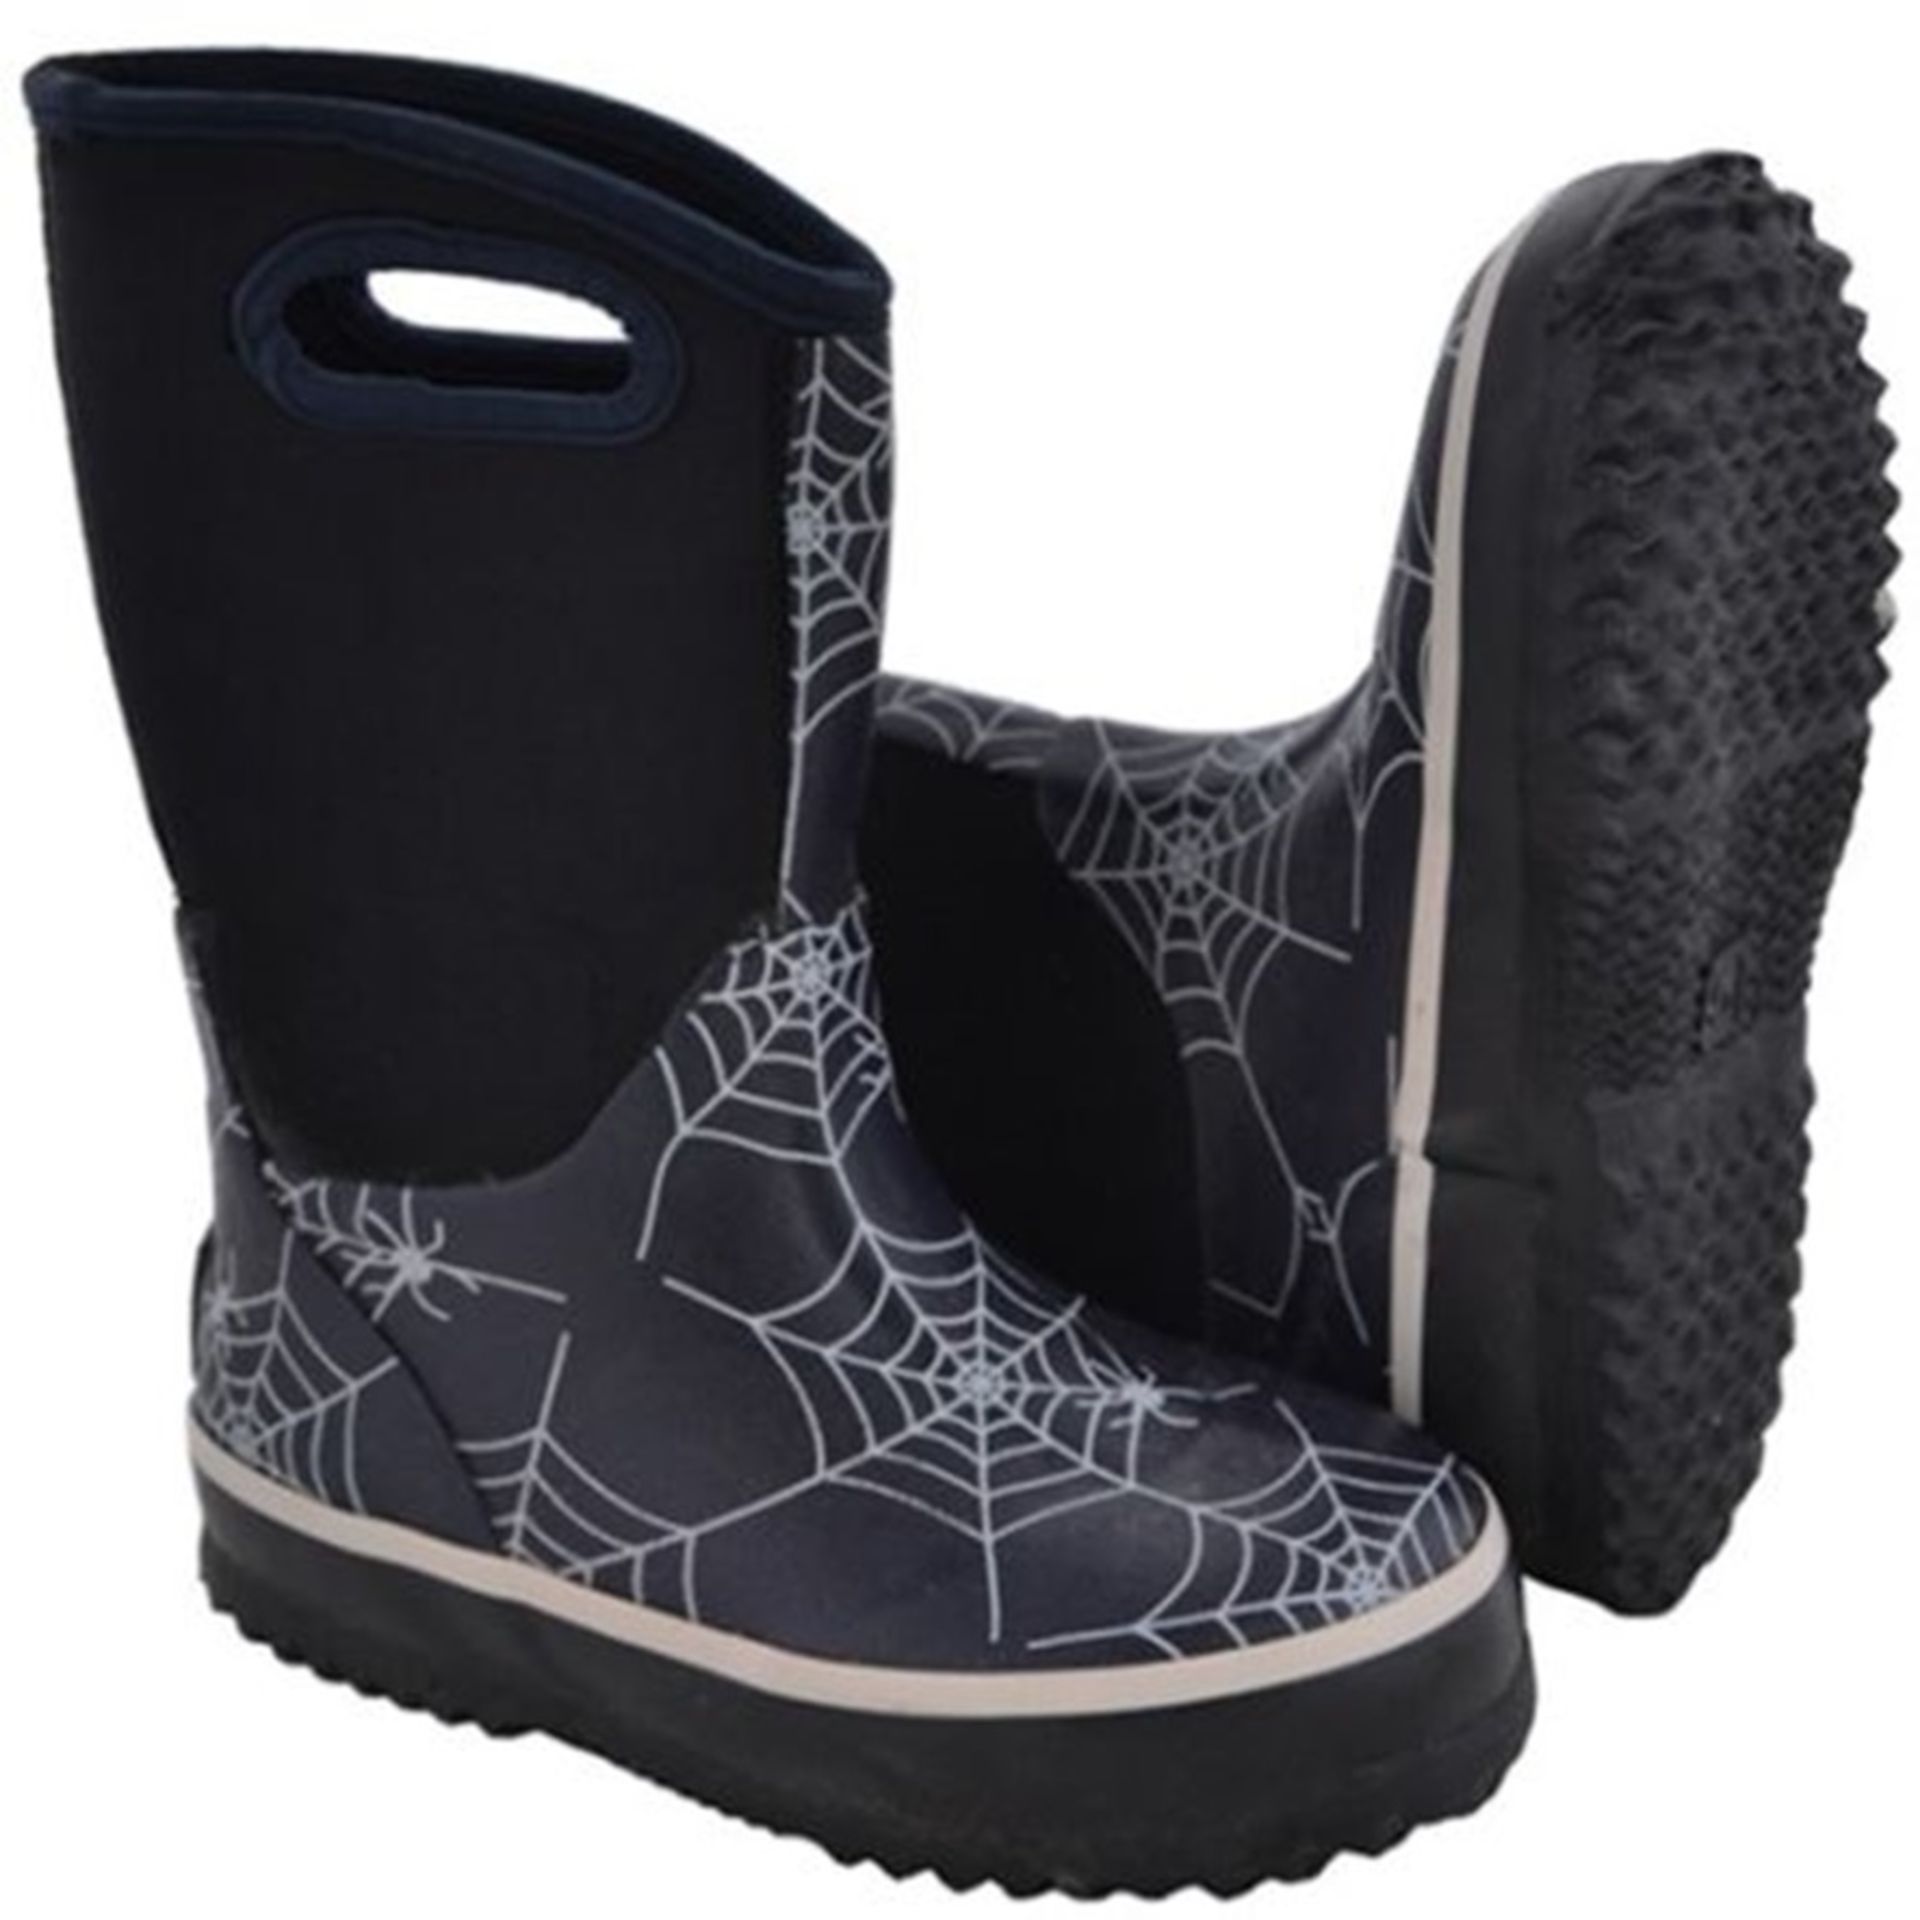 Kids waterproof neoprene wellington boots from USA SPIDERMAN BLUE STREET STYLE BOYS (USA 5) Size